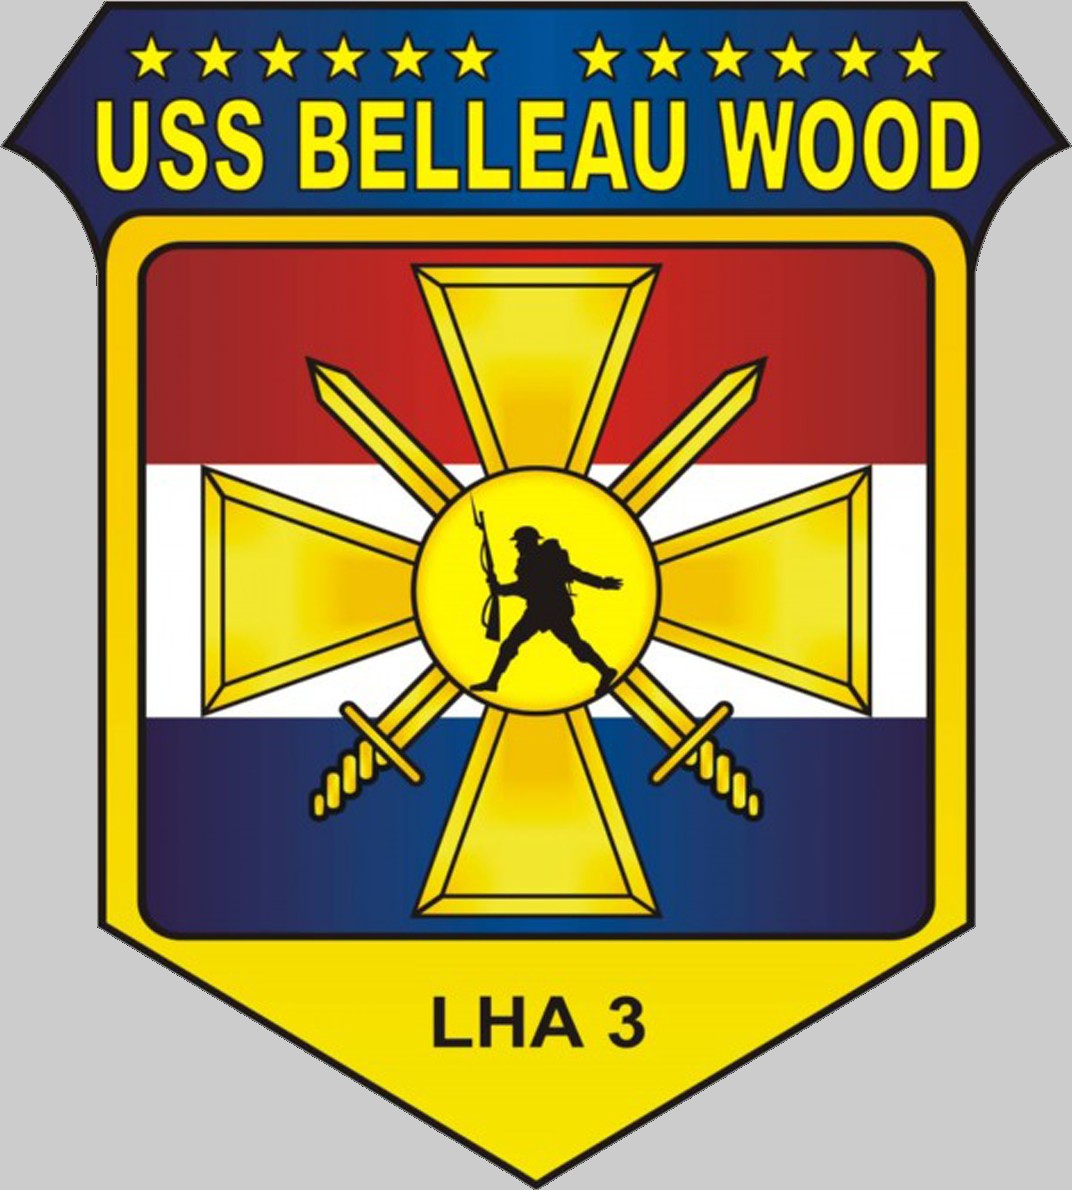 lha-3 uss belleau wood insignia crest patch badge tarawa class amphibious assault ship us navy 02c